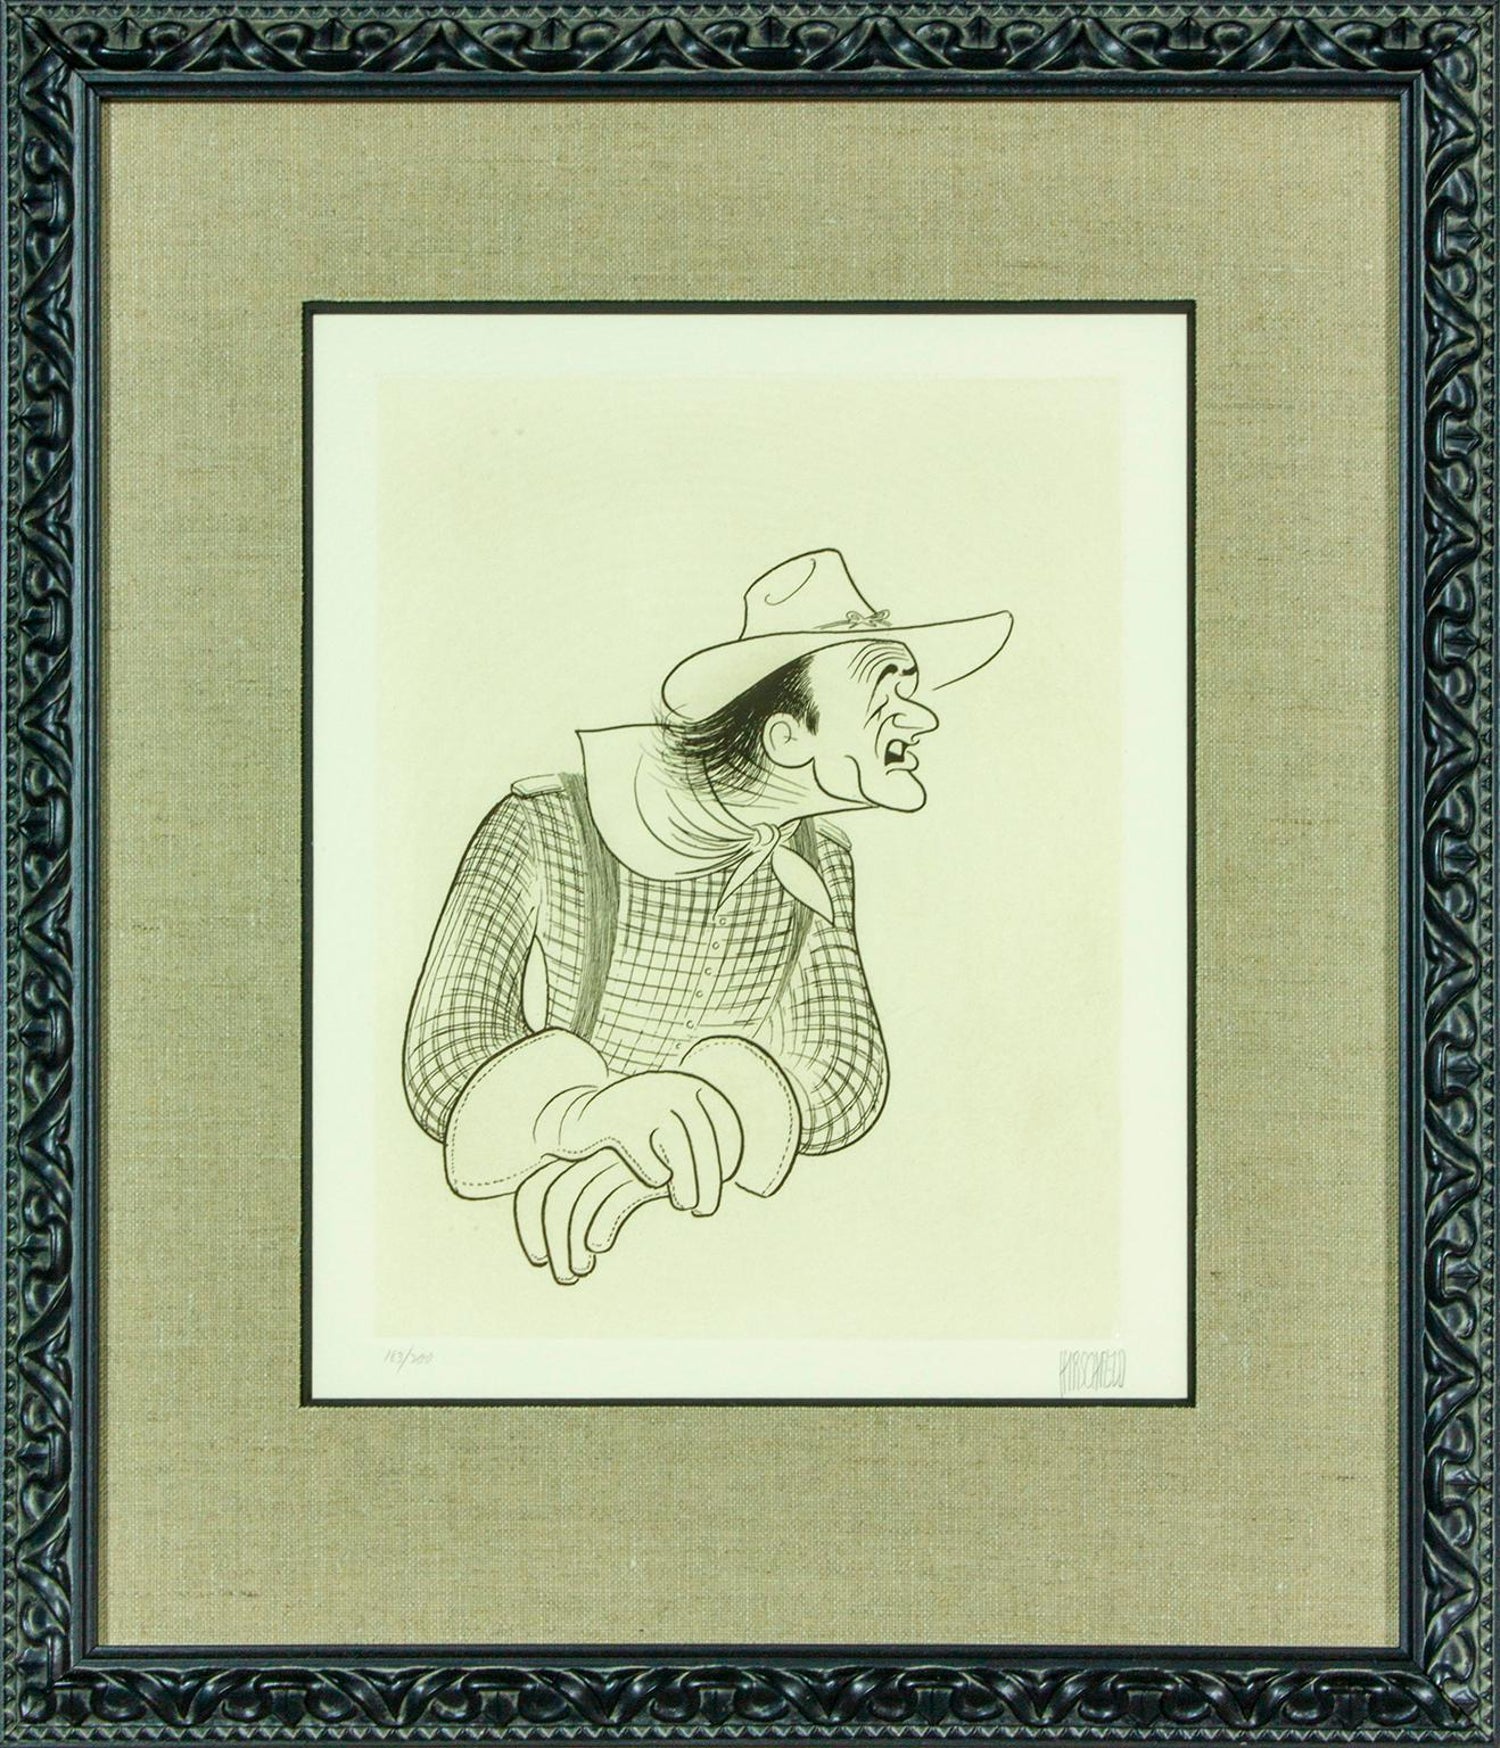 Albert Al Hirschfeld - 1982 "John Wayne" original etching by Al Hirschfeld.  Hand signed and numbered. For Sale at 1stDibs